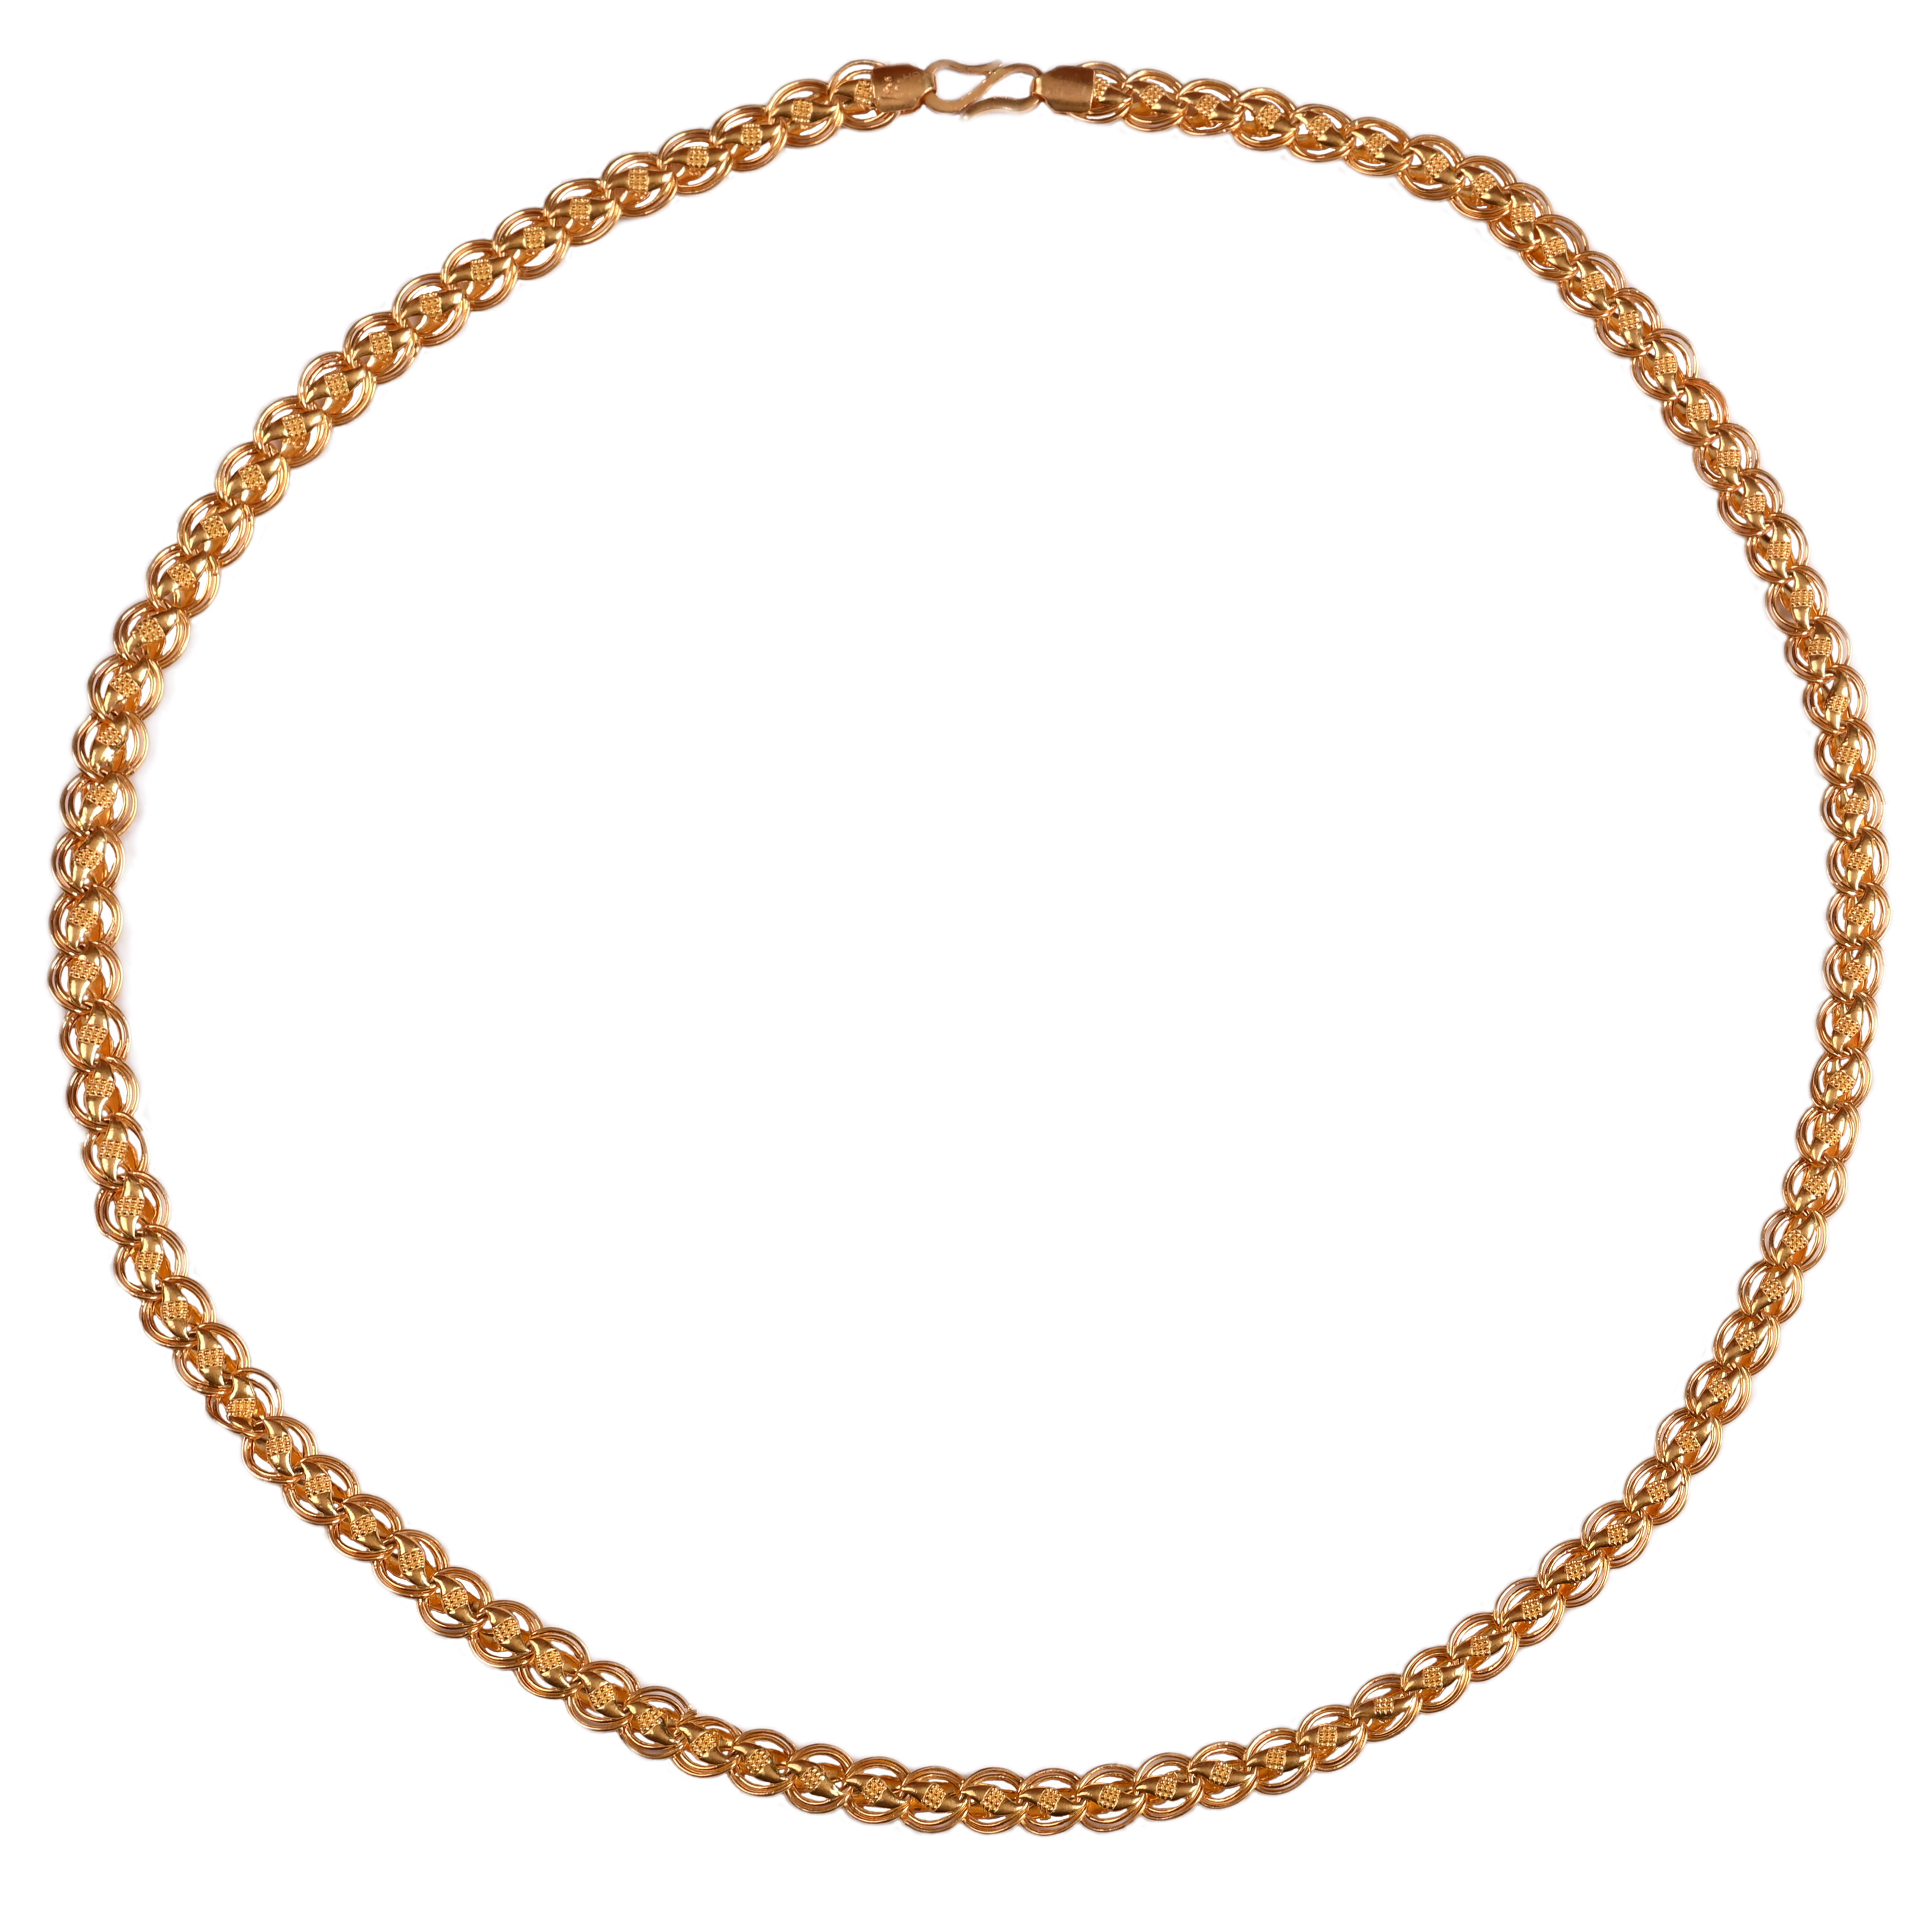 Hira Panna 22k Stylish Gold Bracelet For Men's